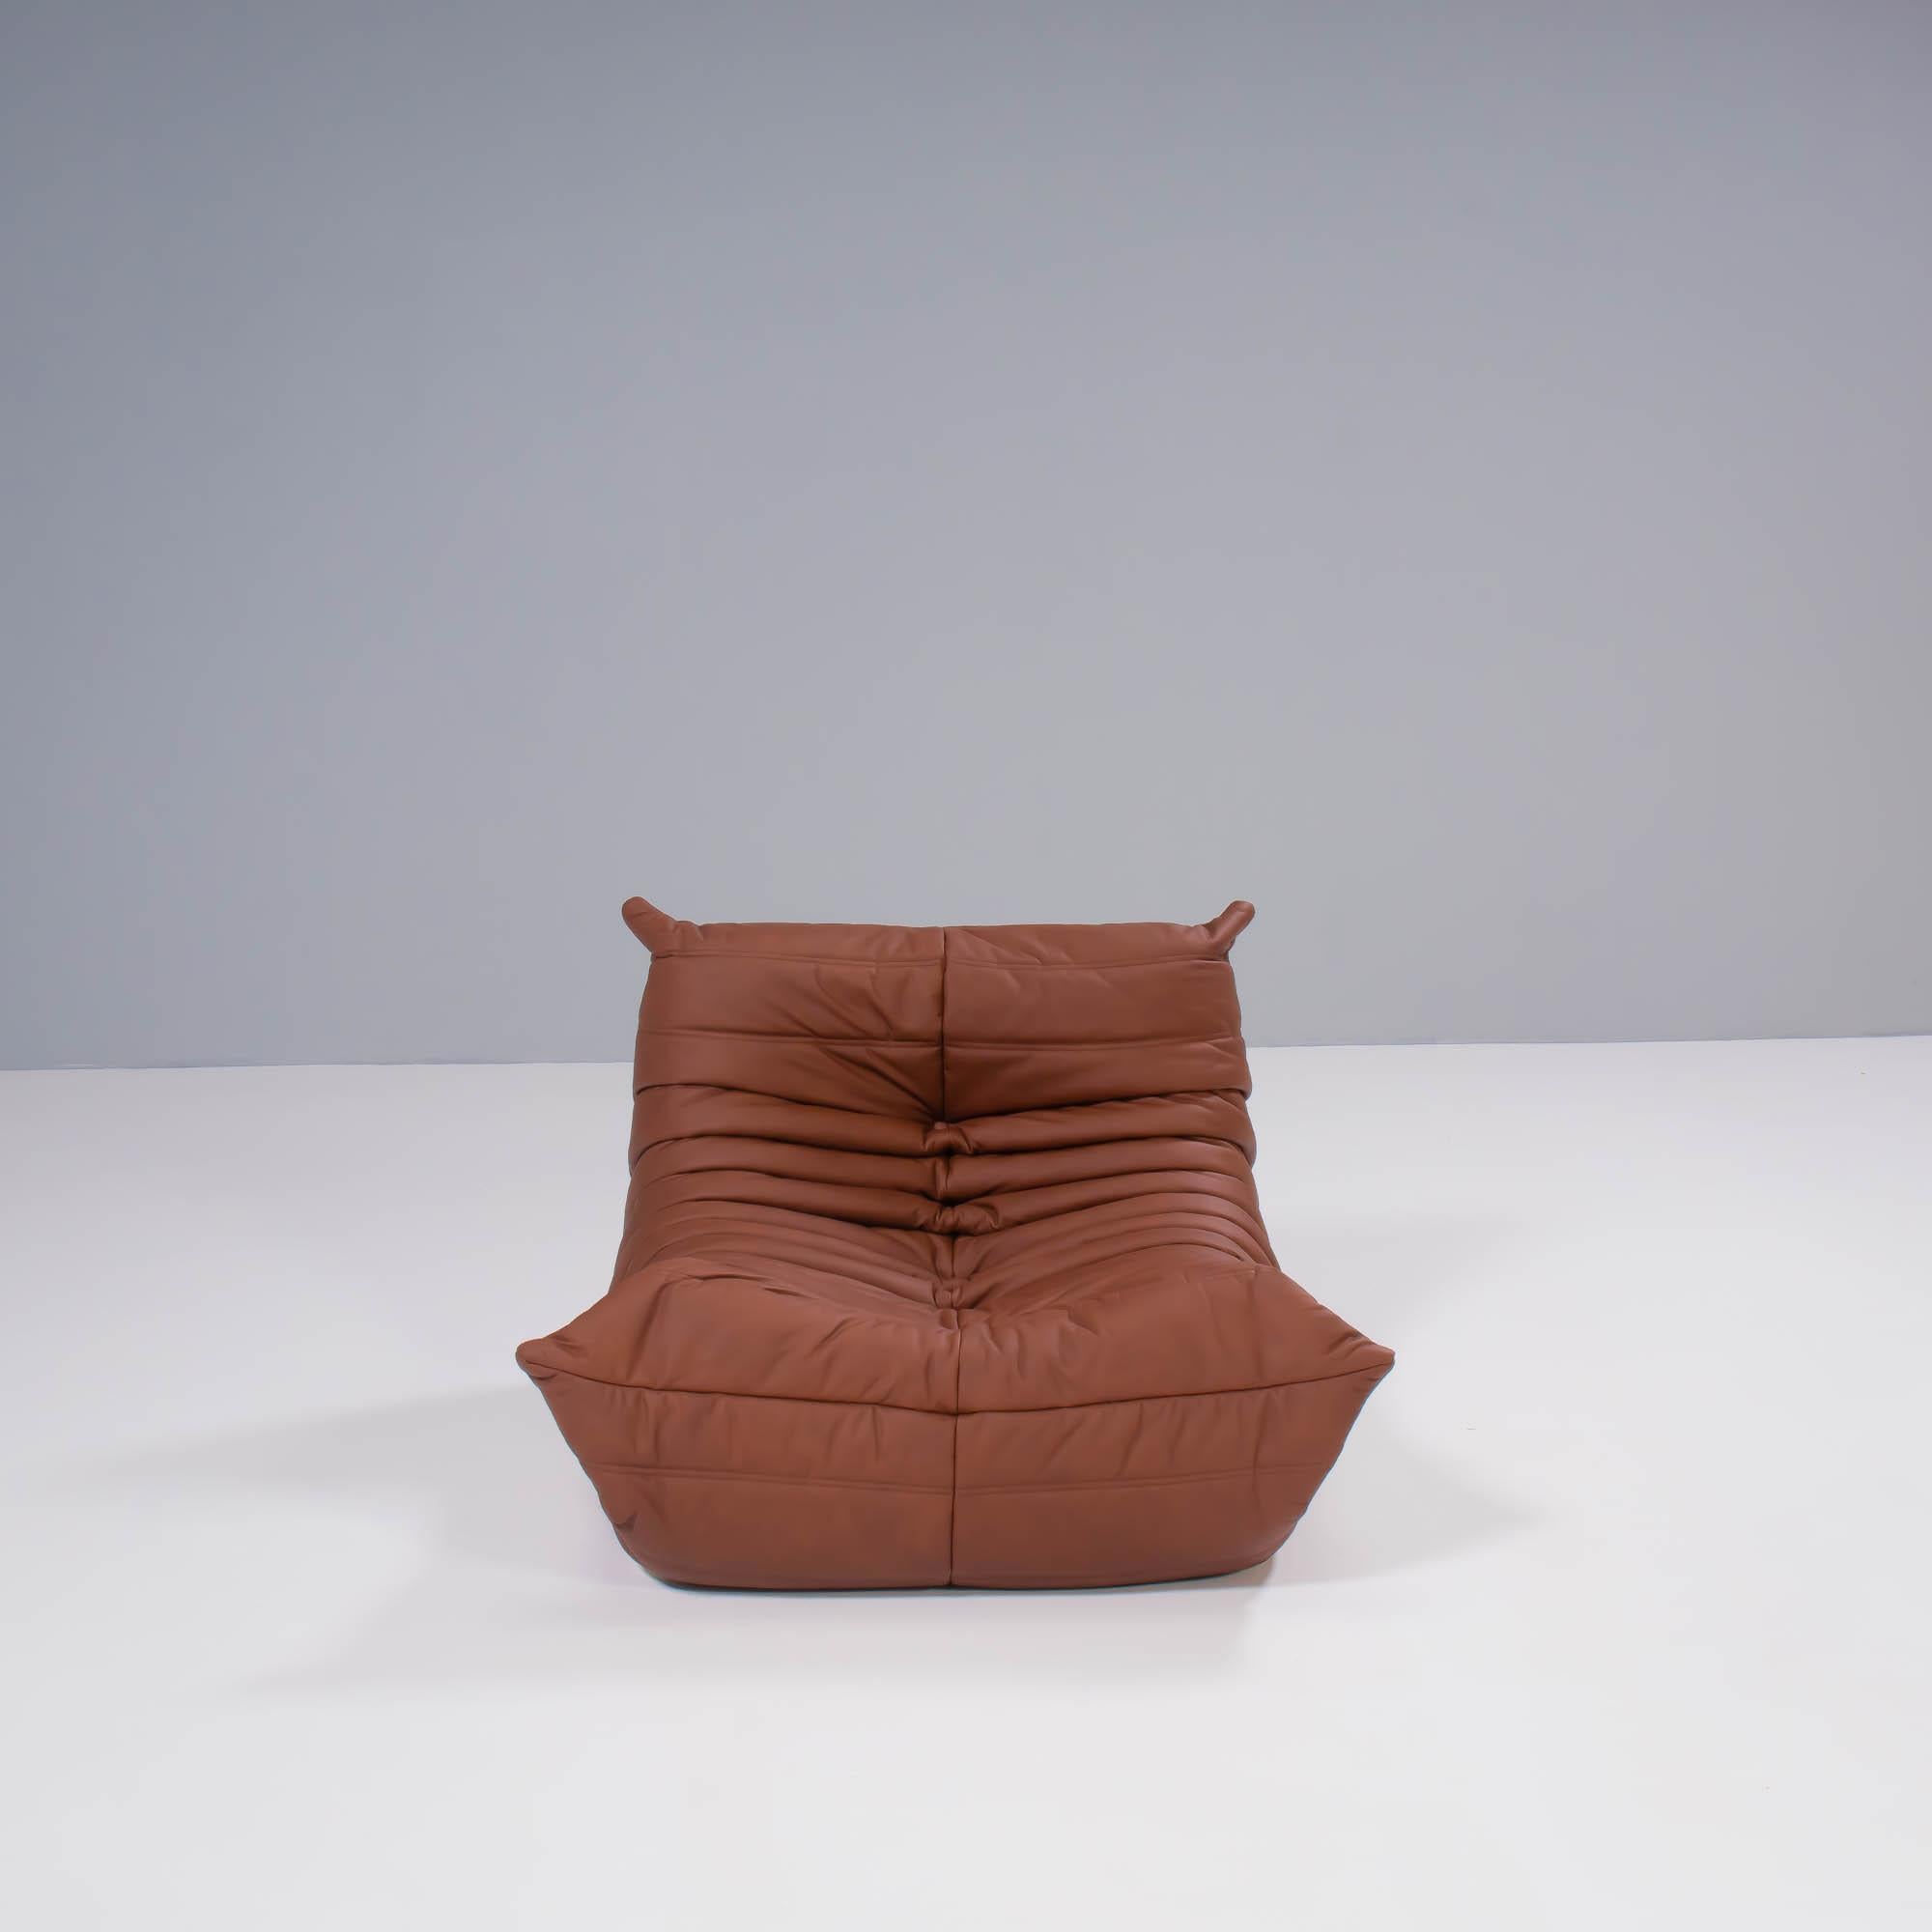 Ligne Roset by Michel Ducaroy Togo Brown Leather Modular Sofa, Set of 5 For Sale 11